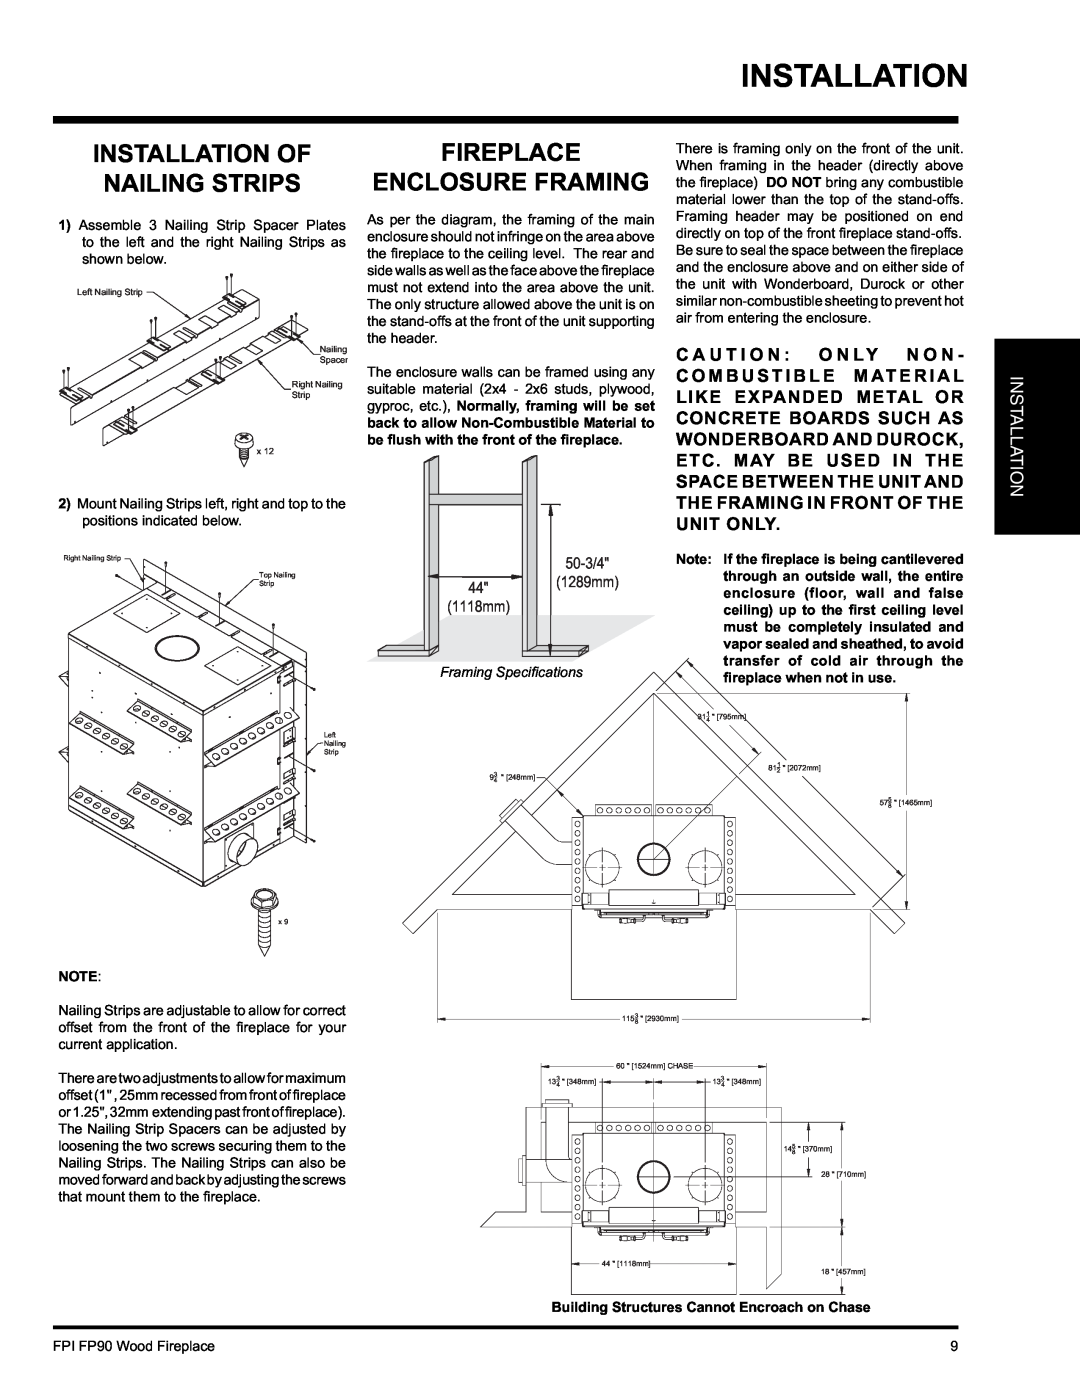 Regency FP90 installation manual Fireplace Enclosure Framing, Installation Of Nailing Strips 